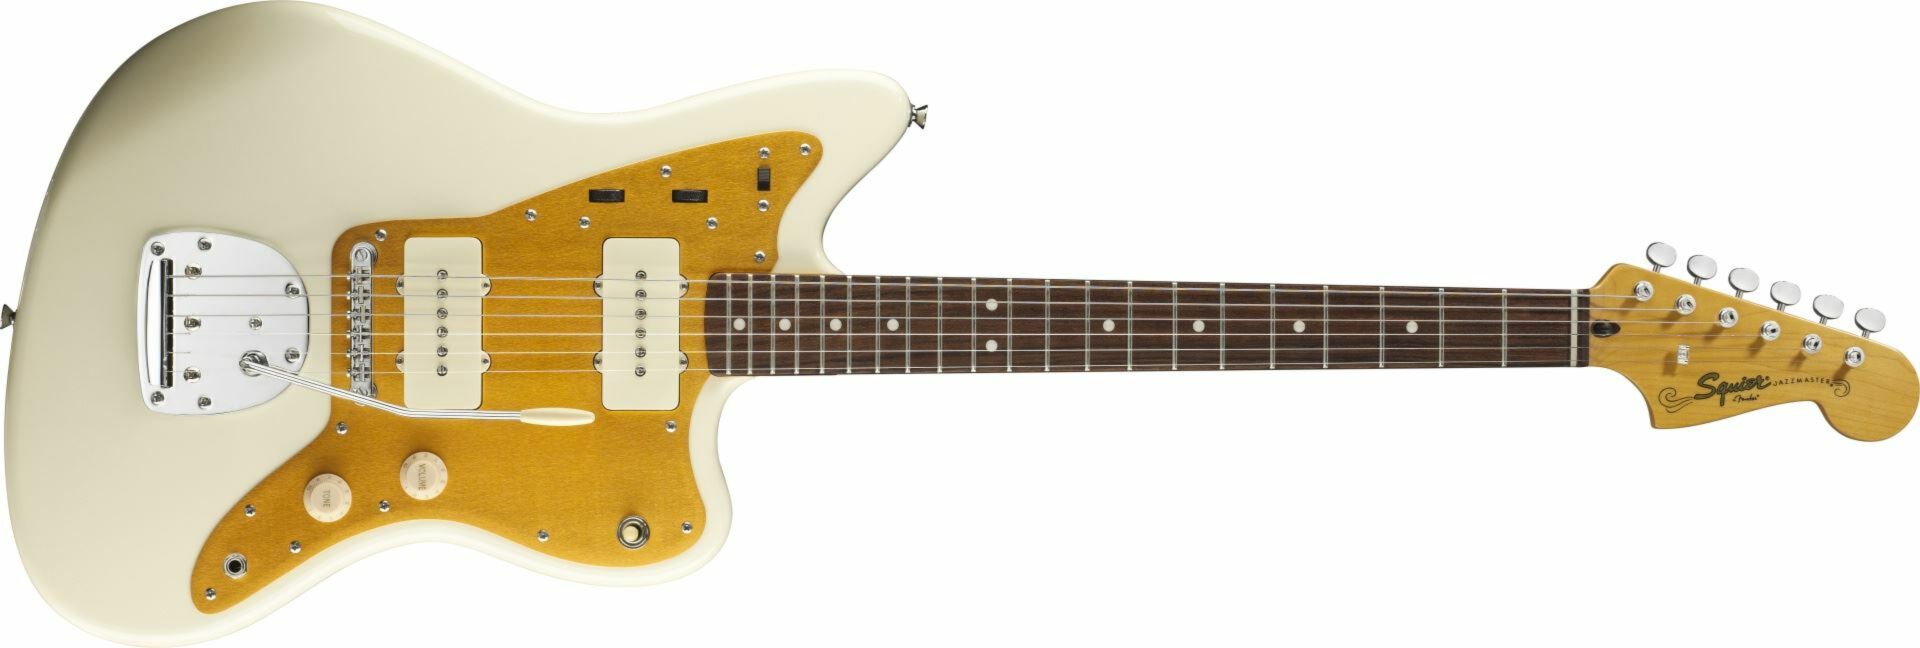 Squier J. Mascis Jazzmaster. Fender Scandinavia, pris: 5599 kr.